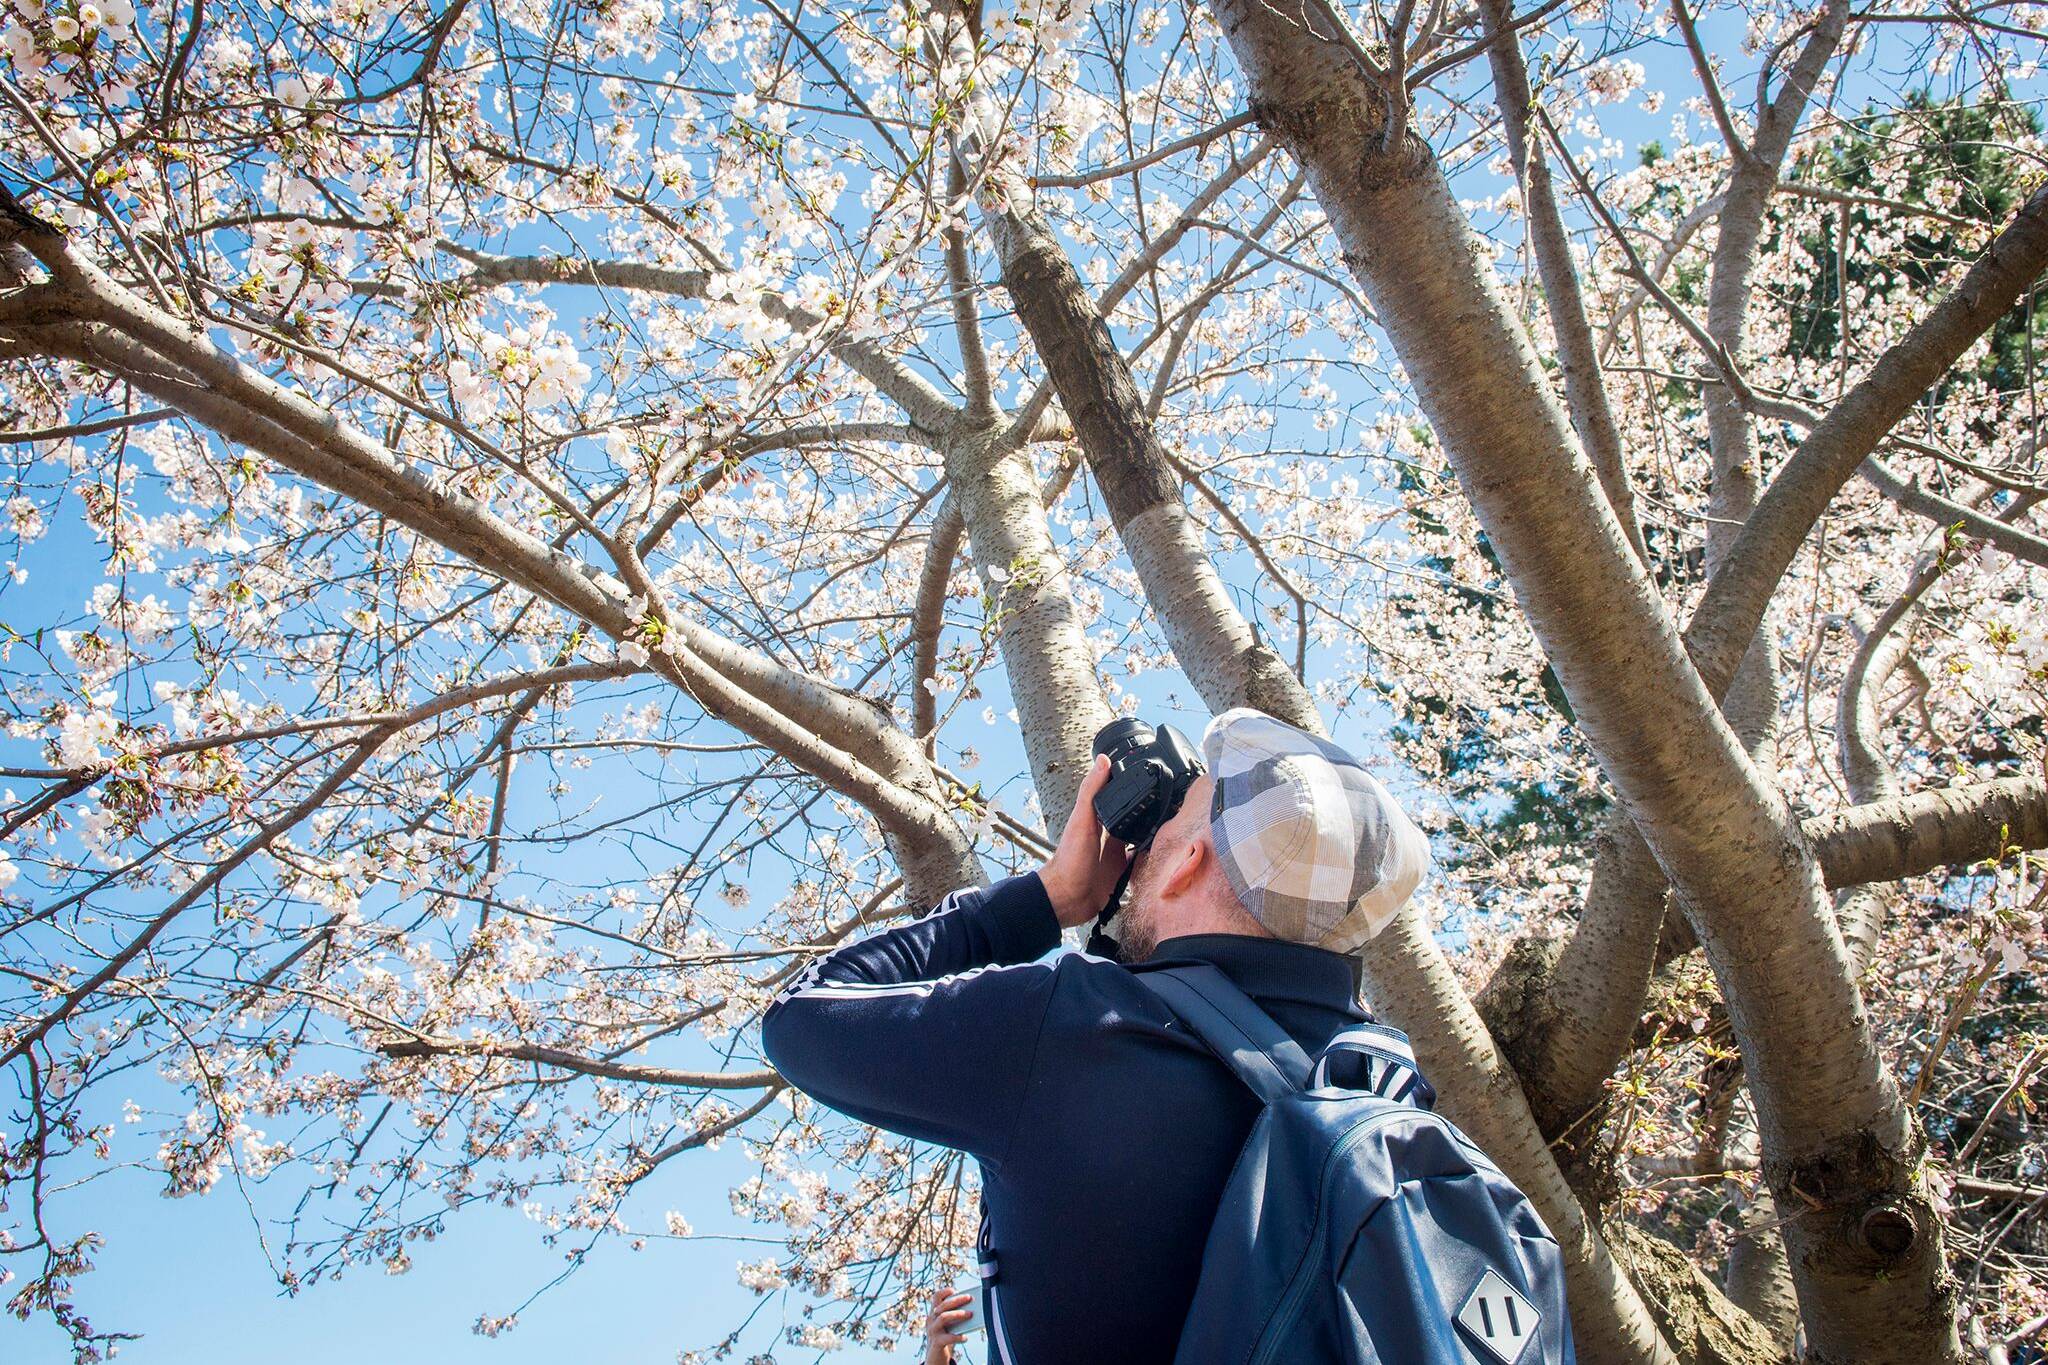 high park cherry blossoms